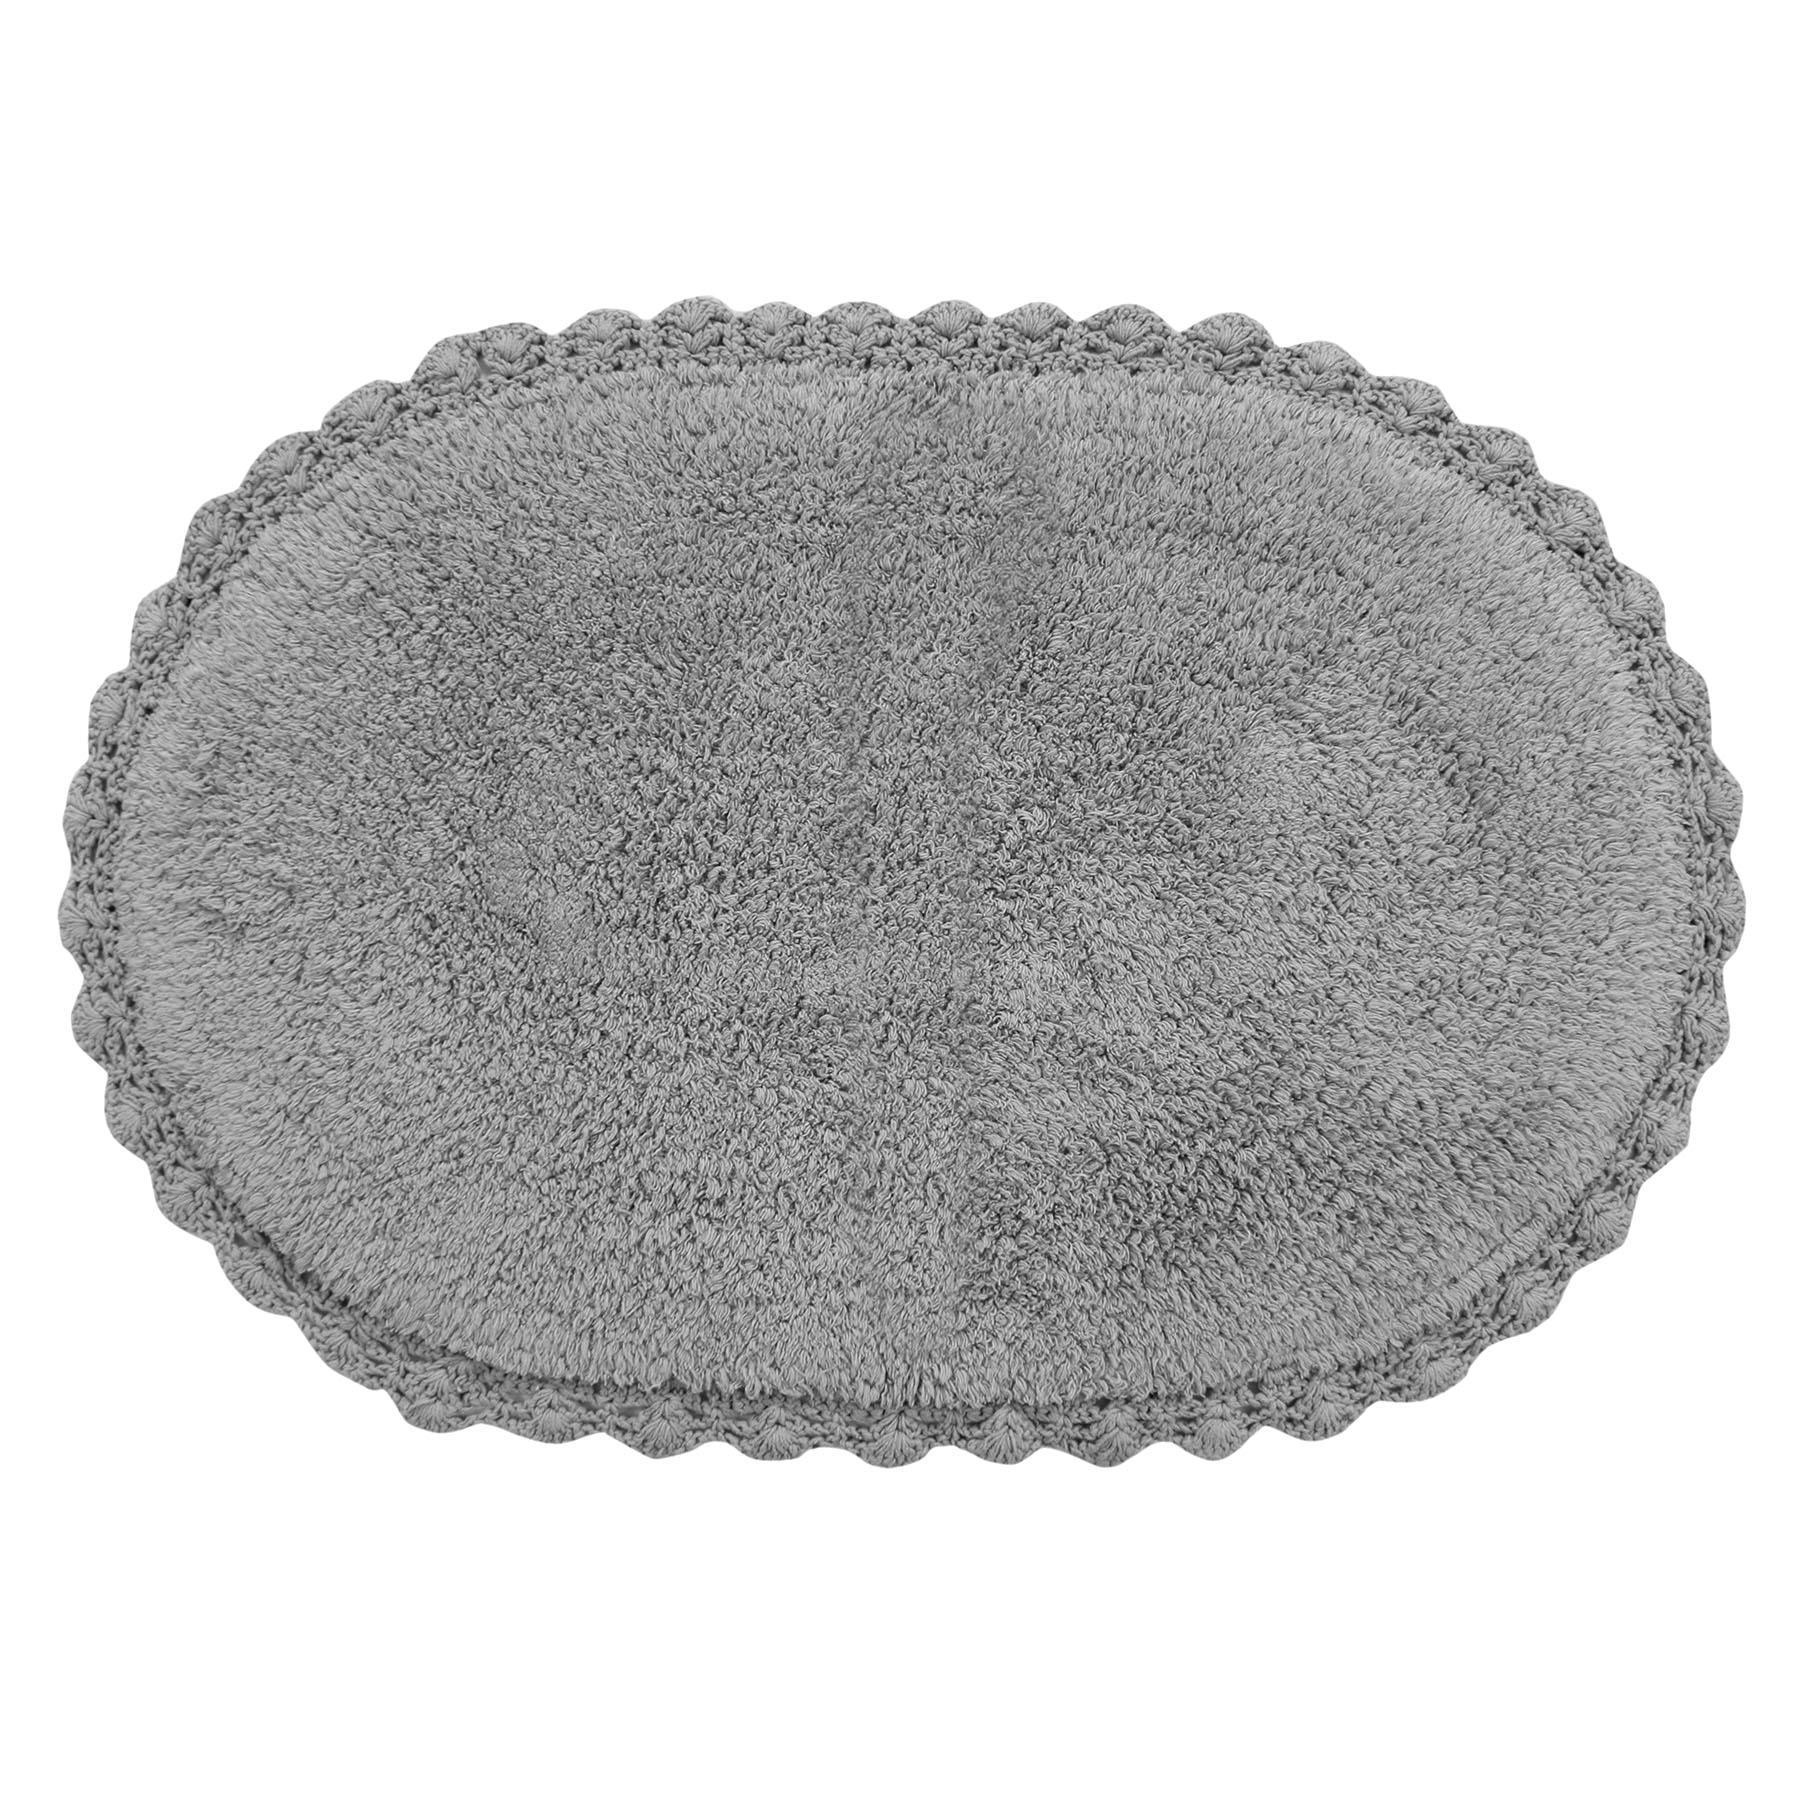 Aqua Crochet Edge Round Bath Mat, 21x34